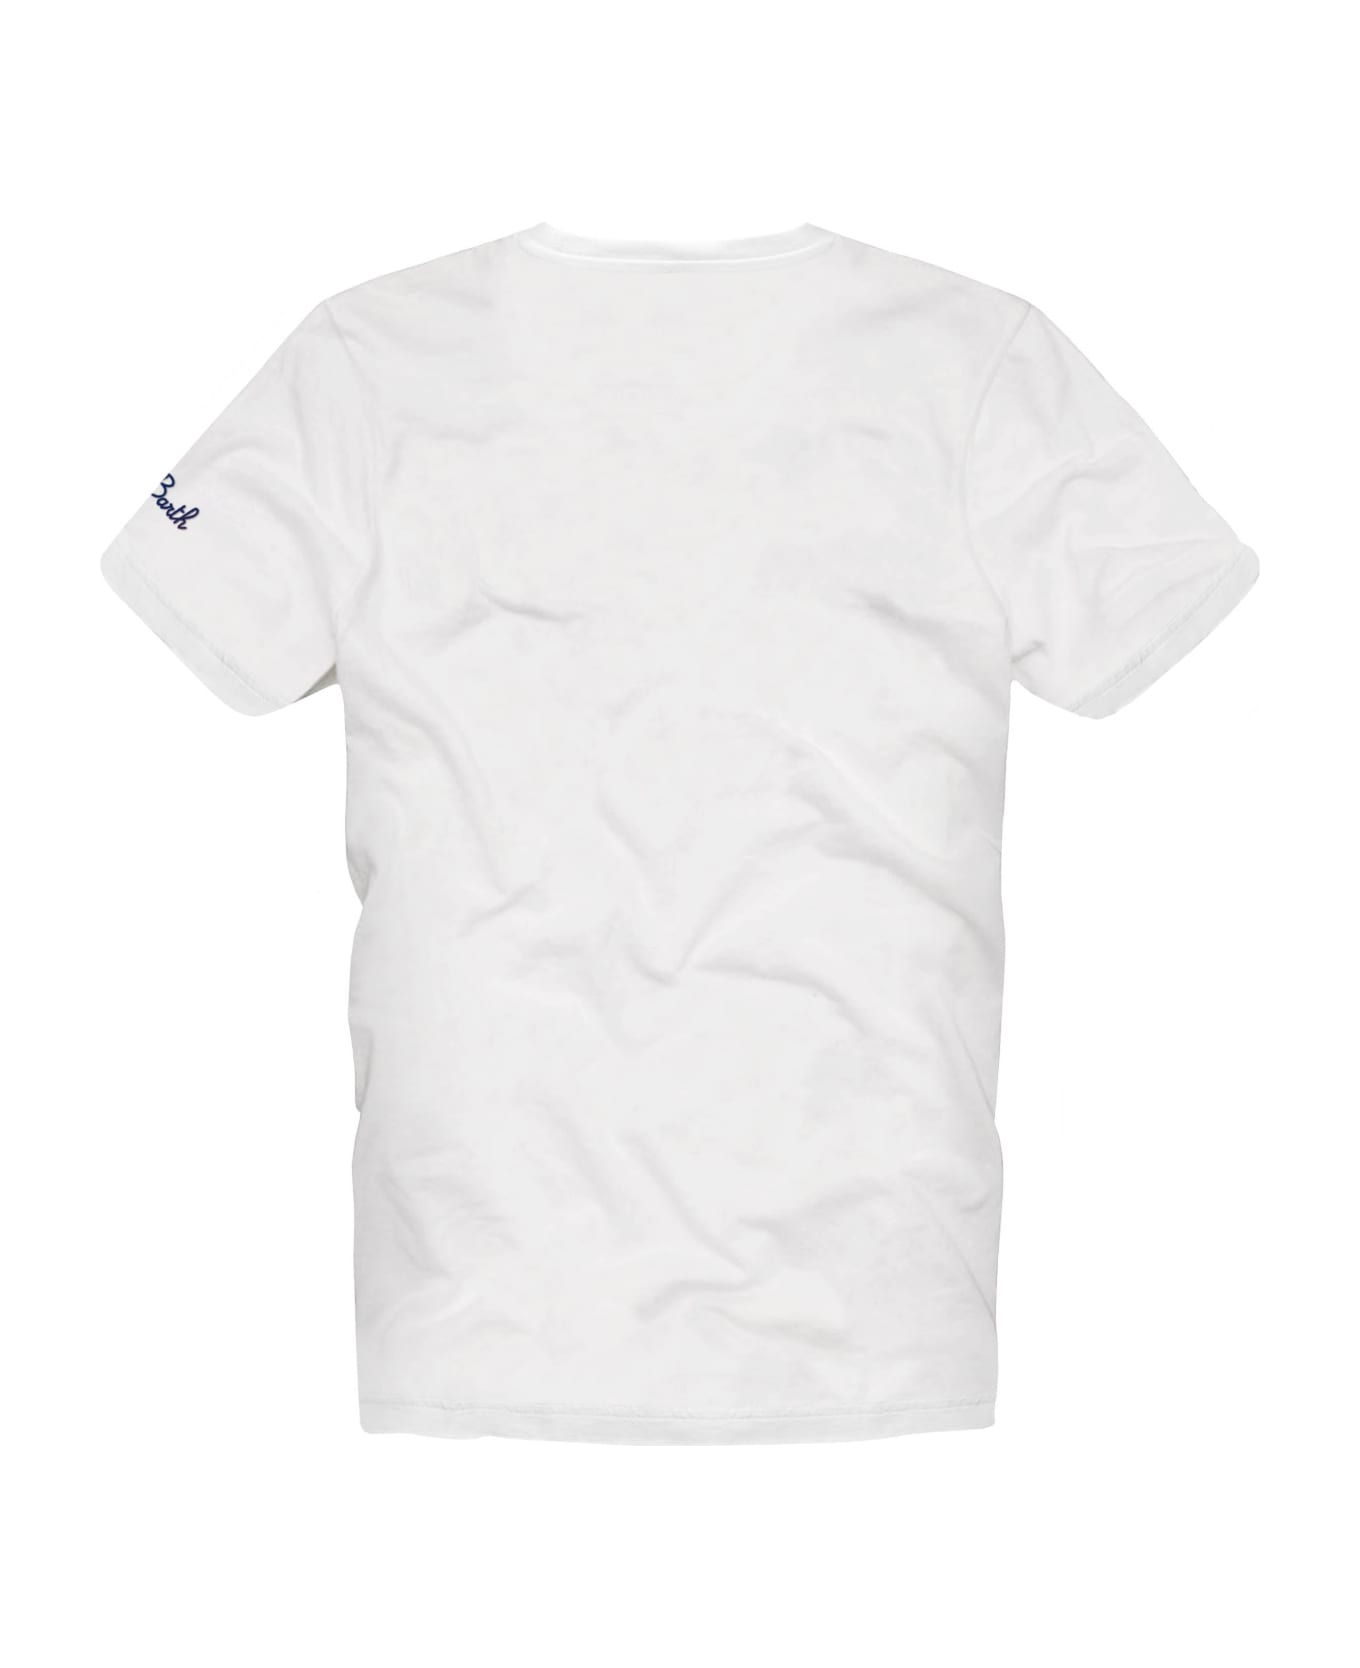 MC2 Saint Barth Man Cotton T-shirt With St. Barth Basketball Print